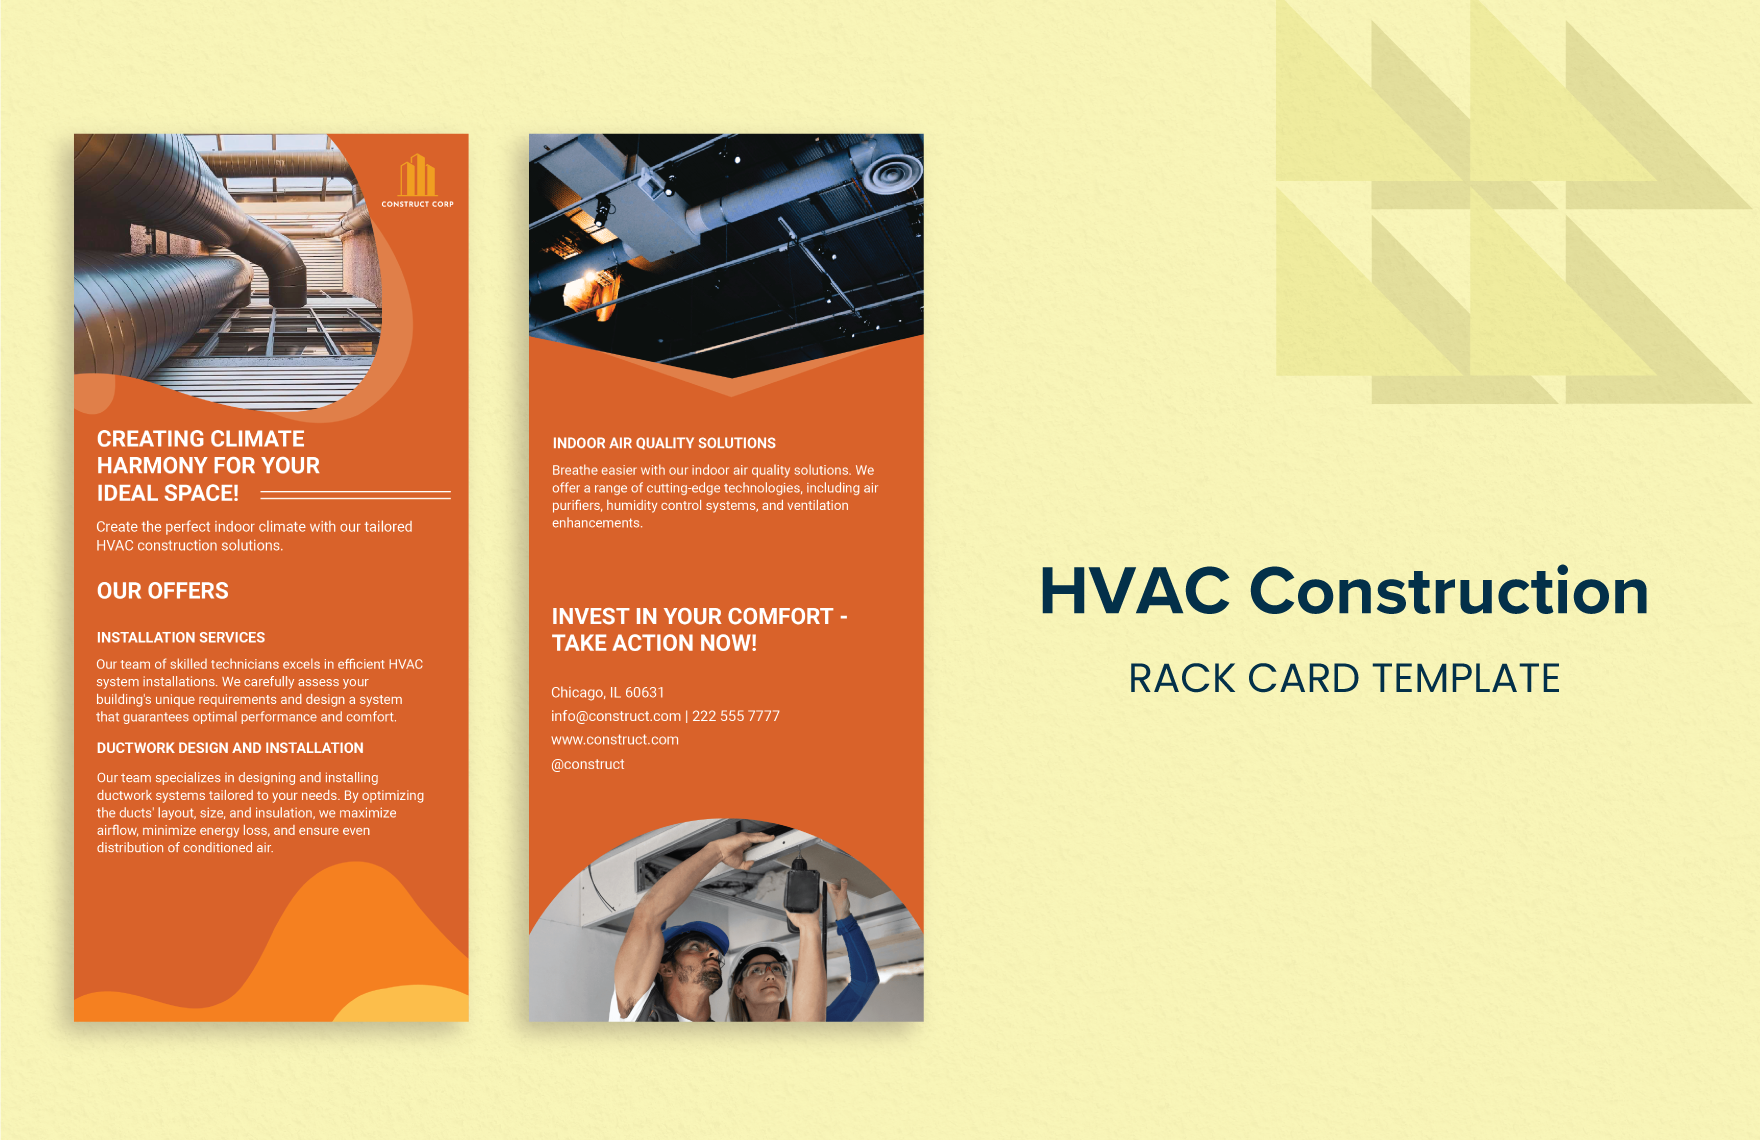 HVAC Construction Rack Card Template